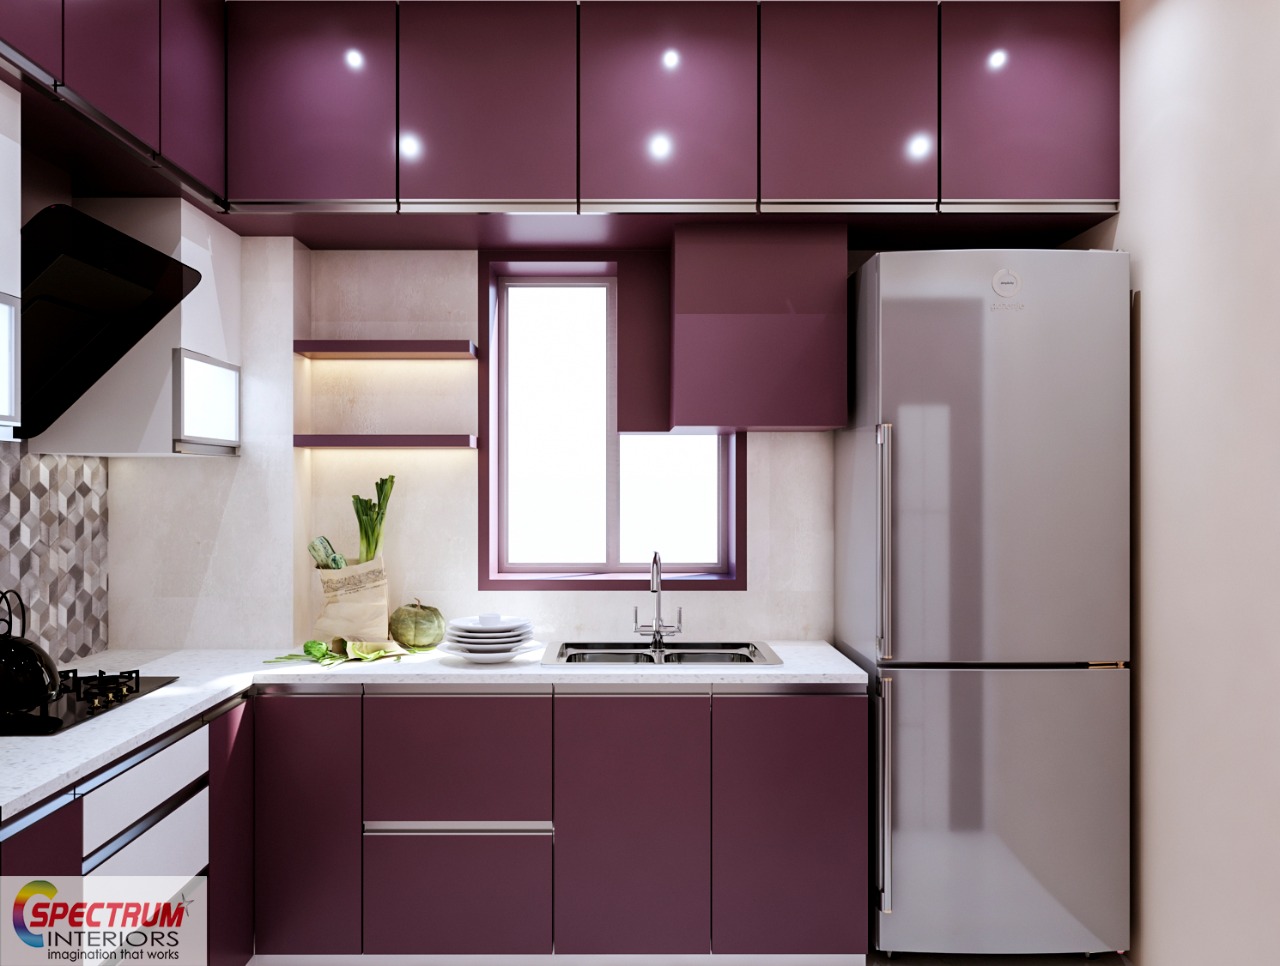 تملي رياضي لول kitchen interior design   smallshopmanagement.com